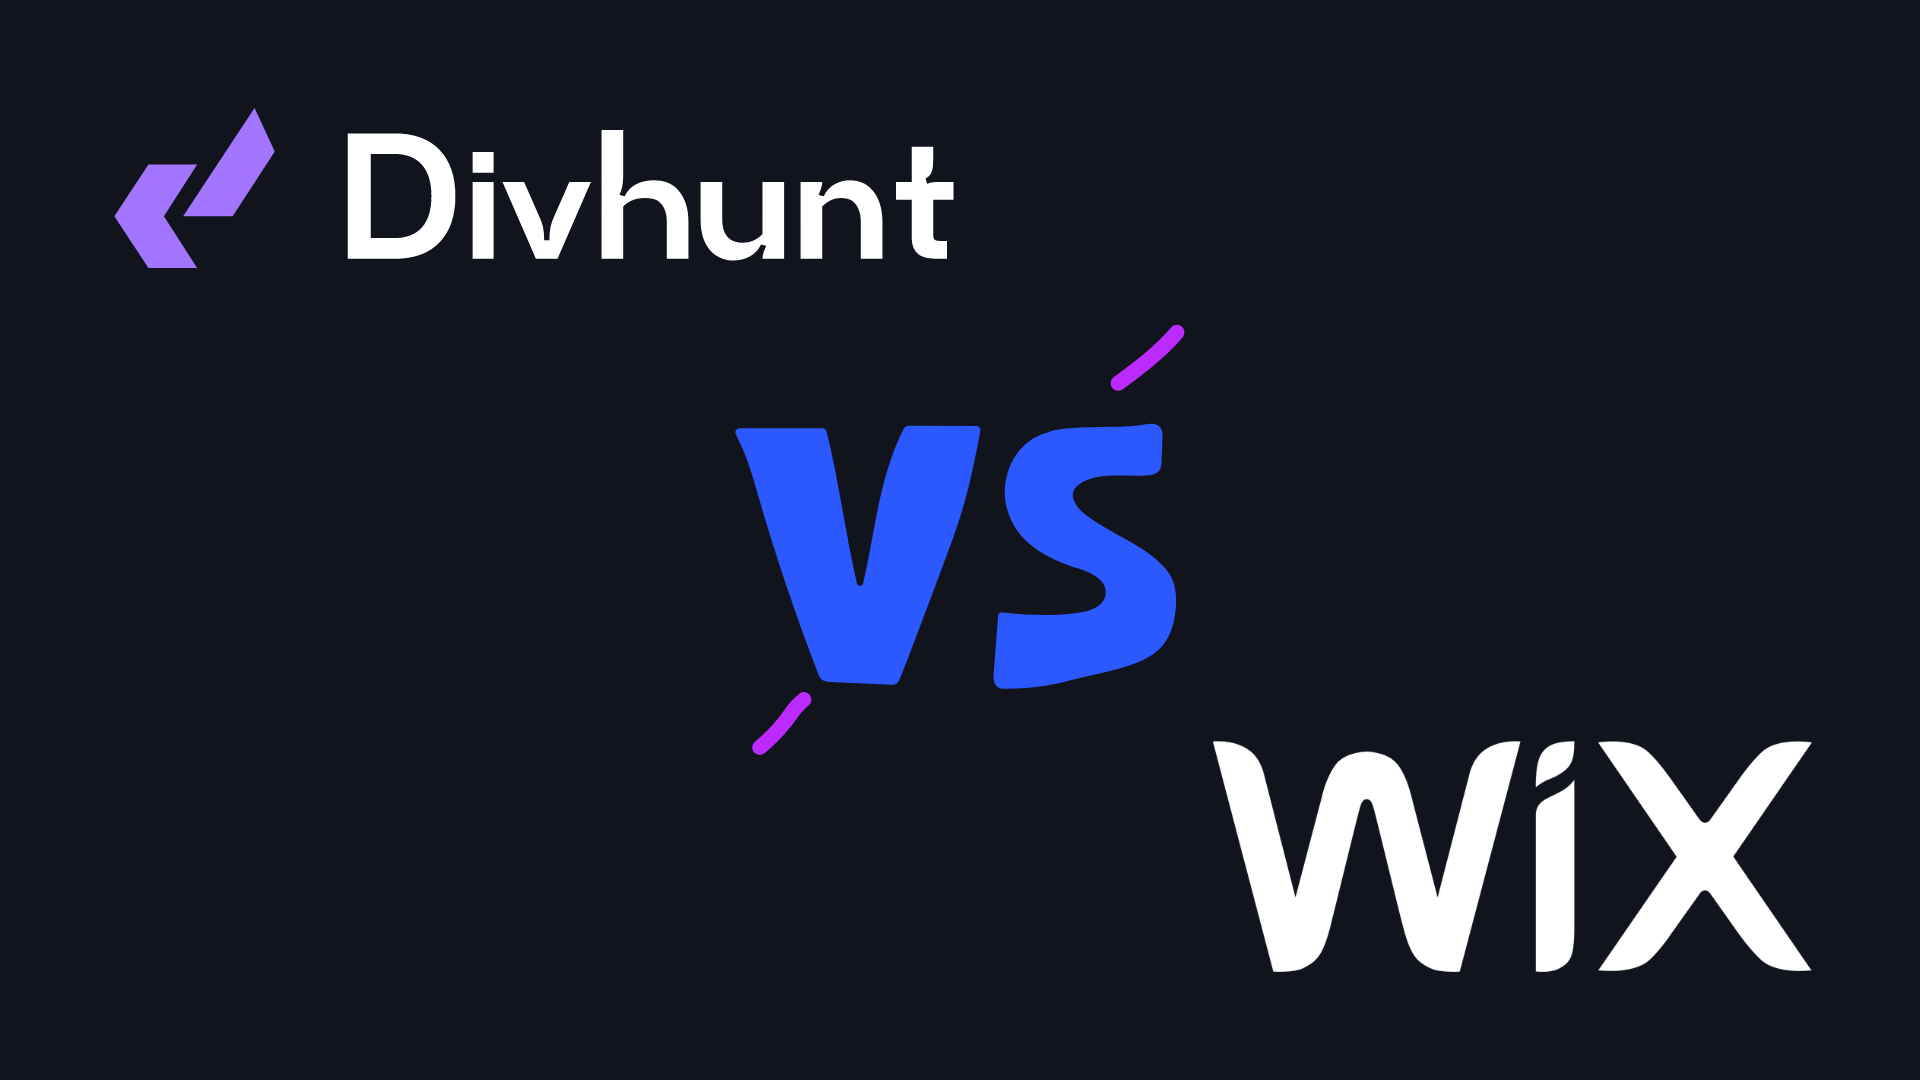 Divhunt vs Wix